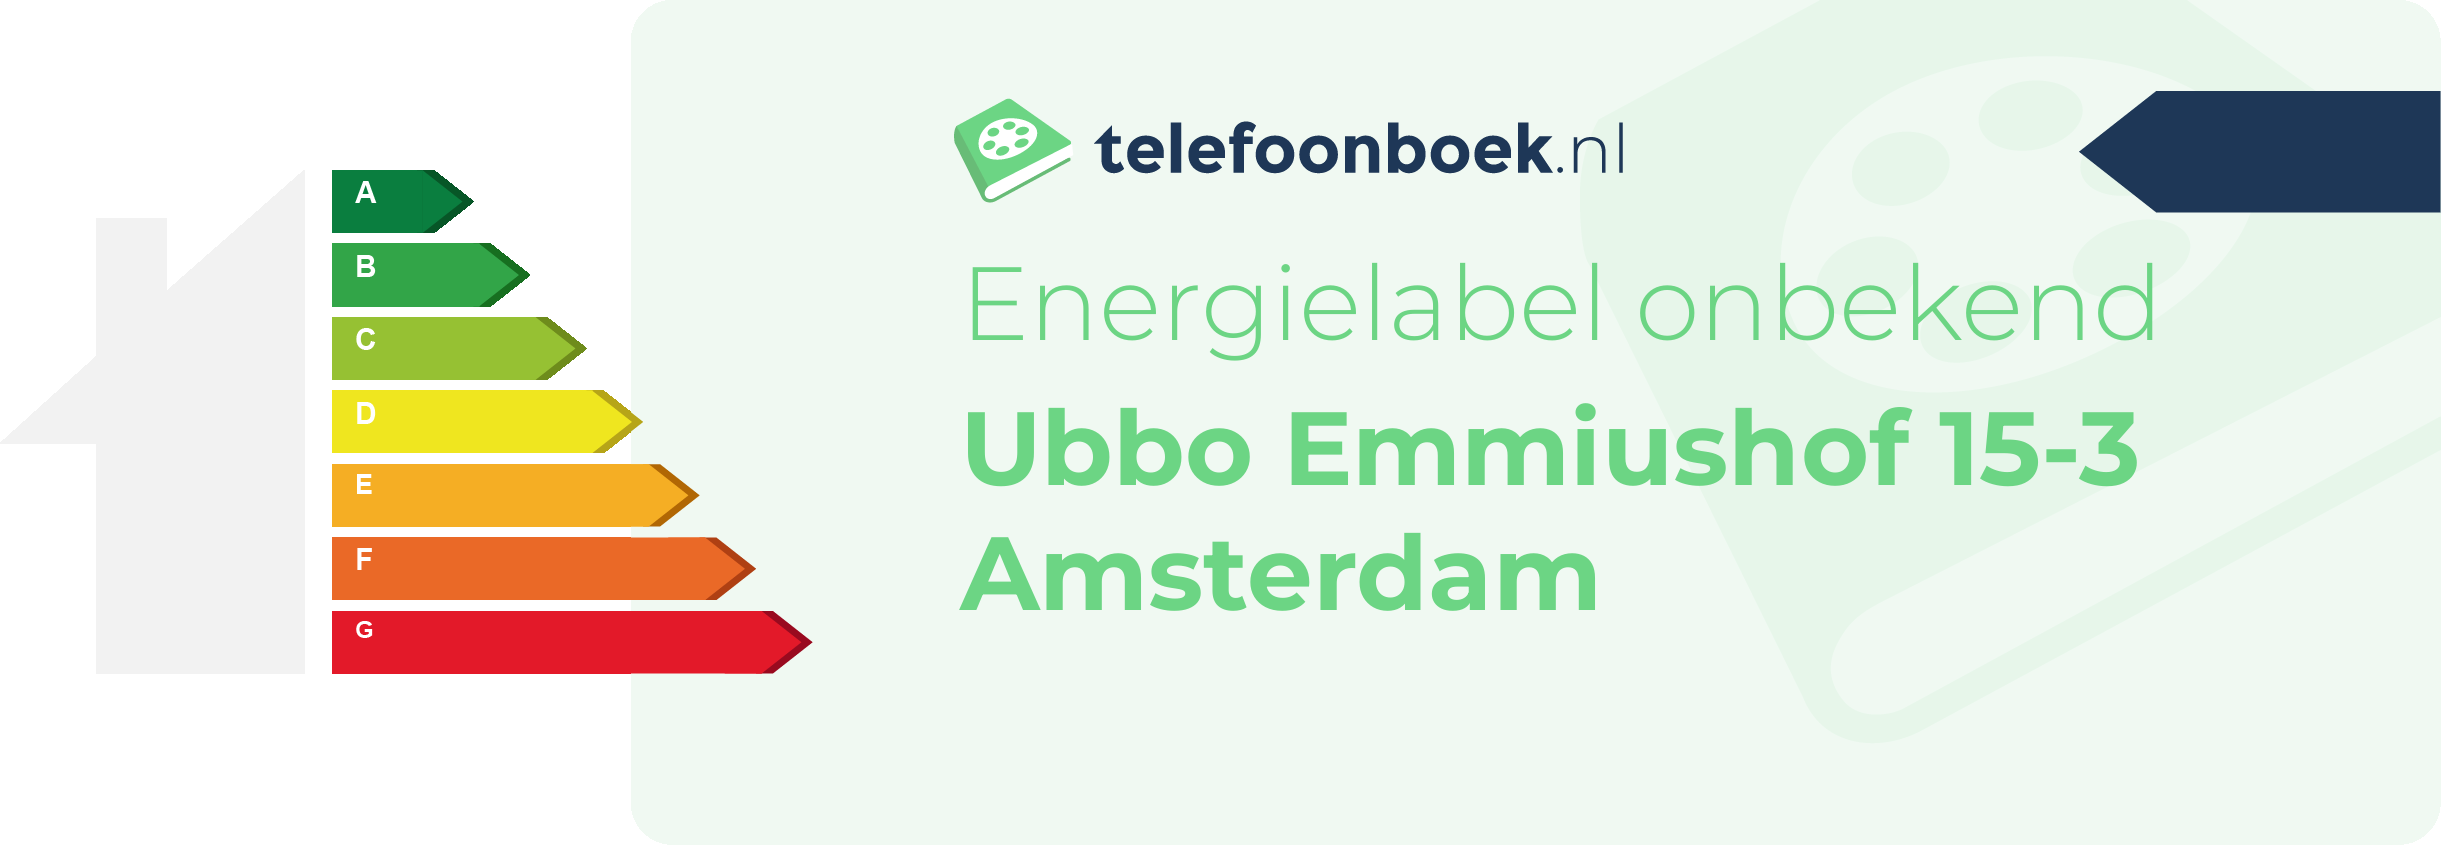 Energielabel Ubbo Emmiushof 15-3 Amsterdam